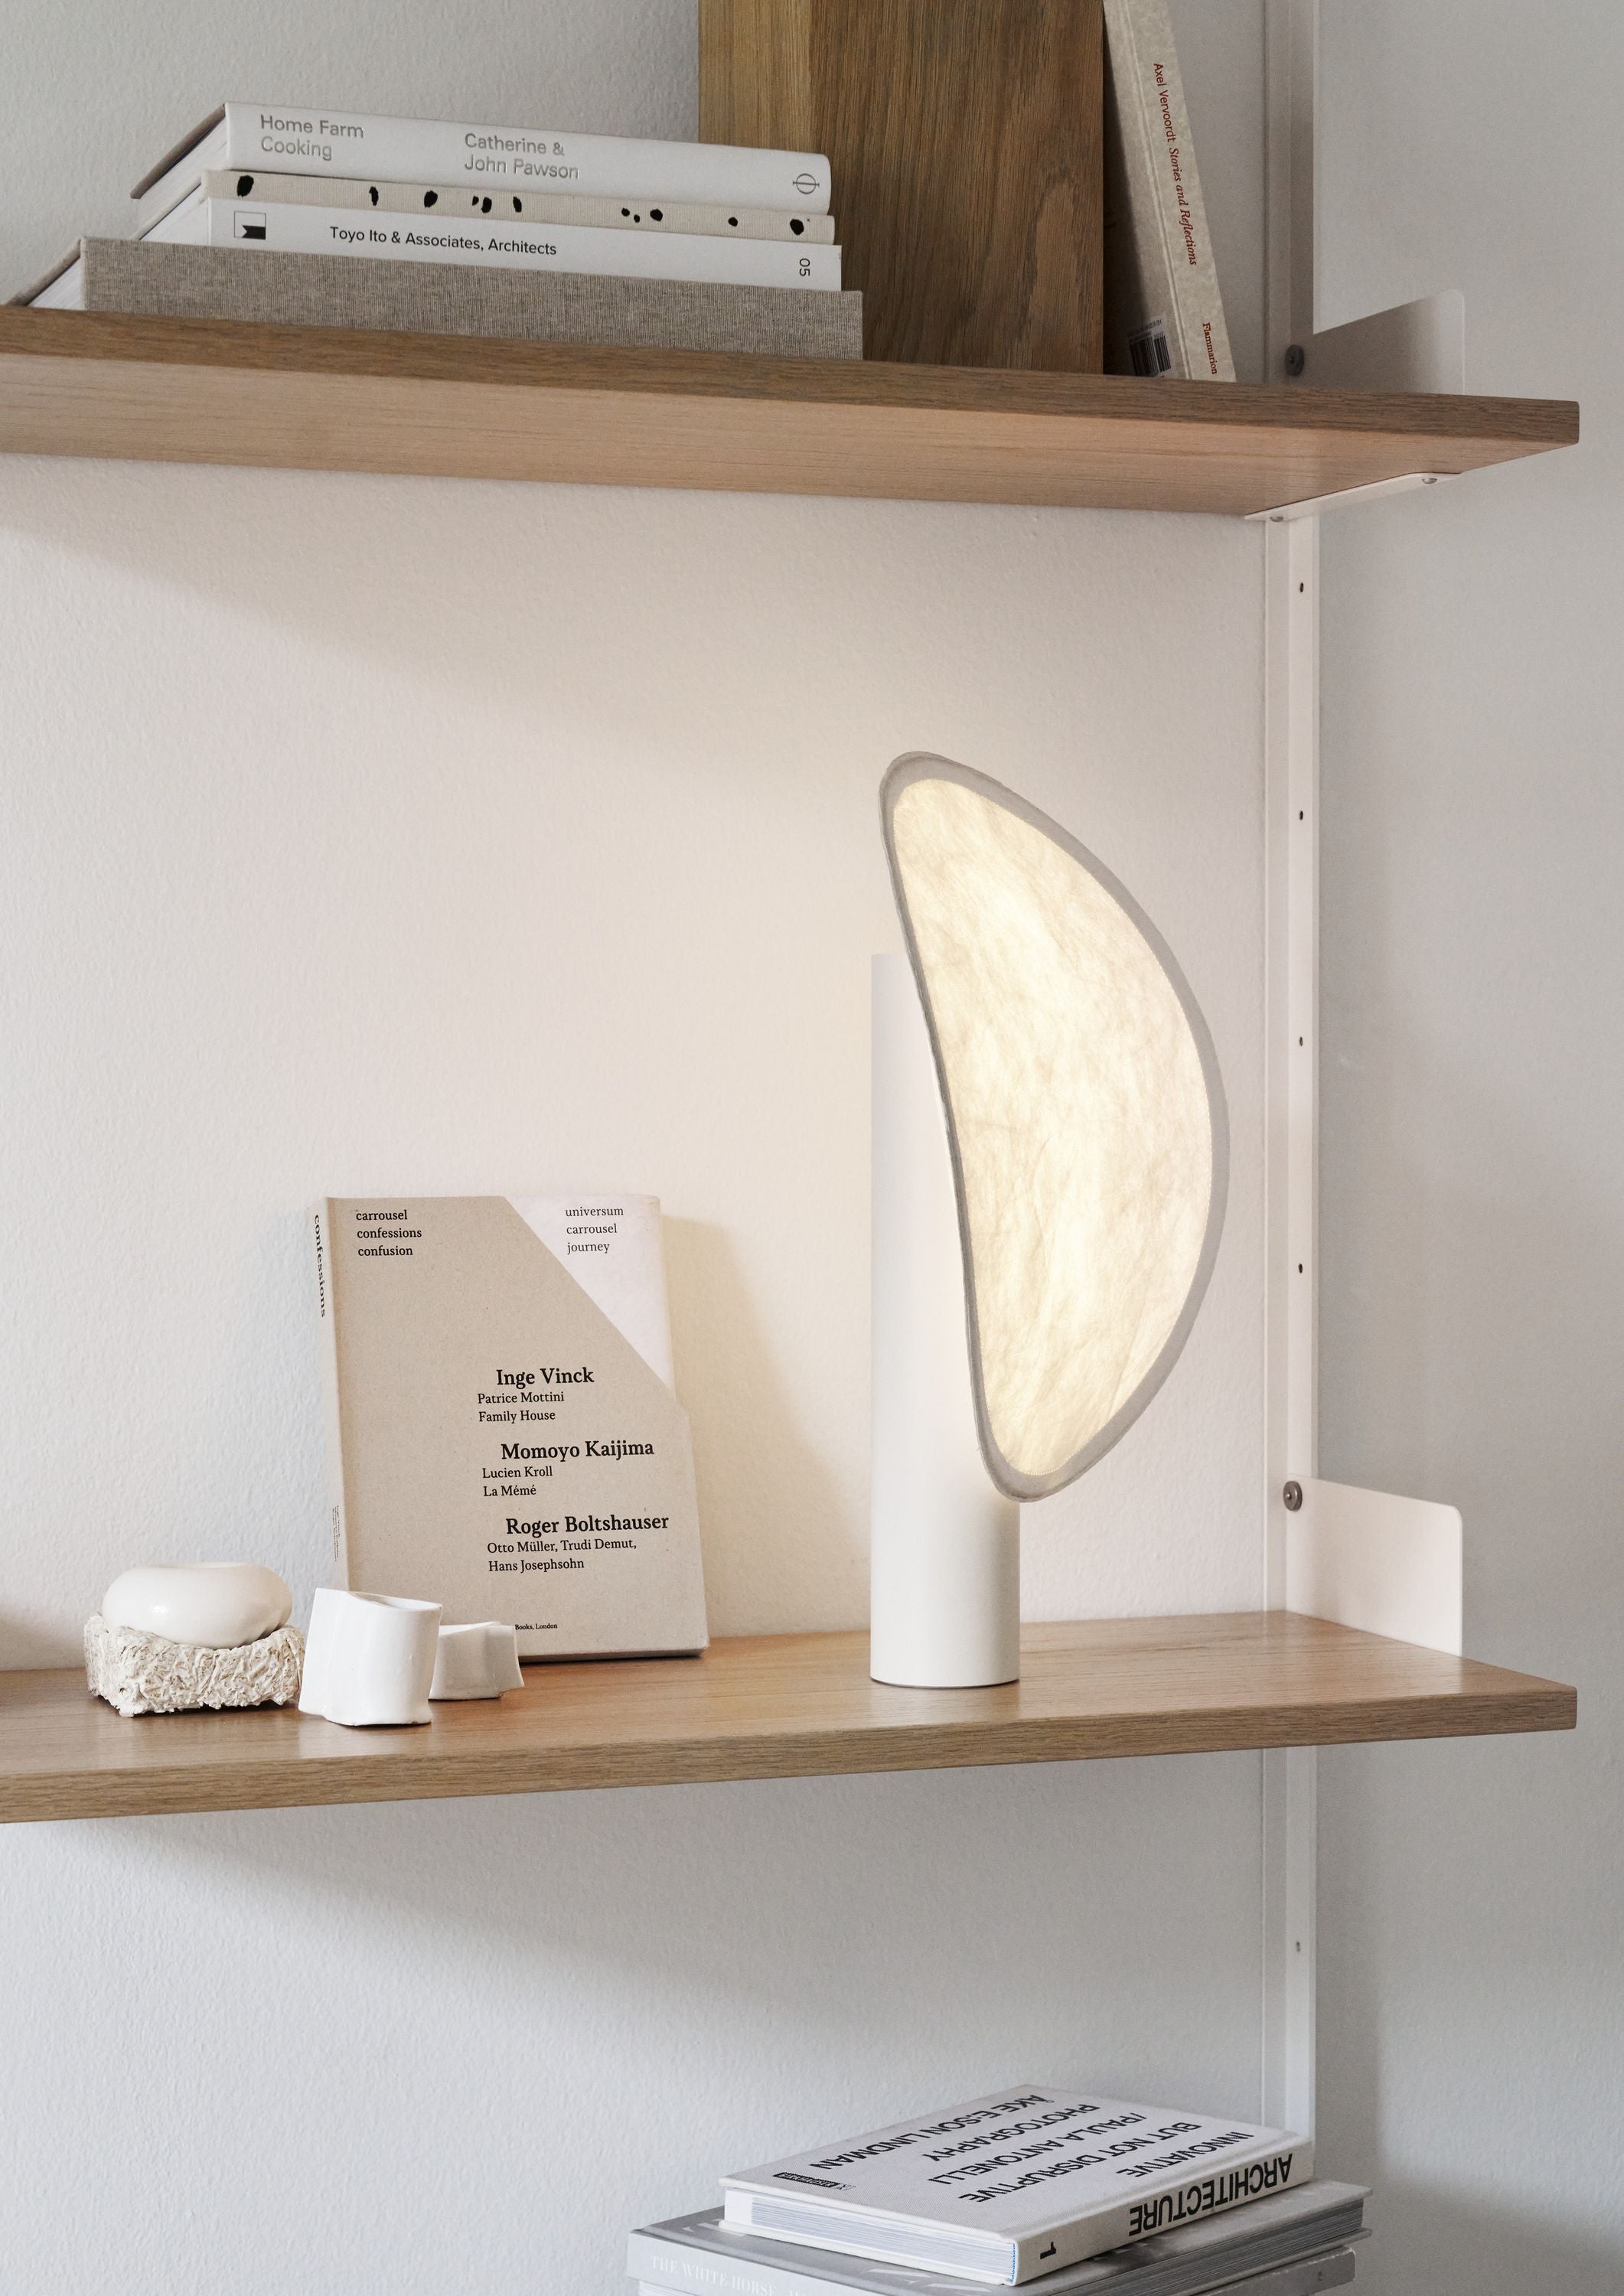 New Works Lampe de table portable tendue, blanc